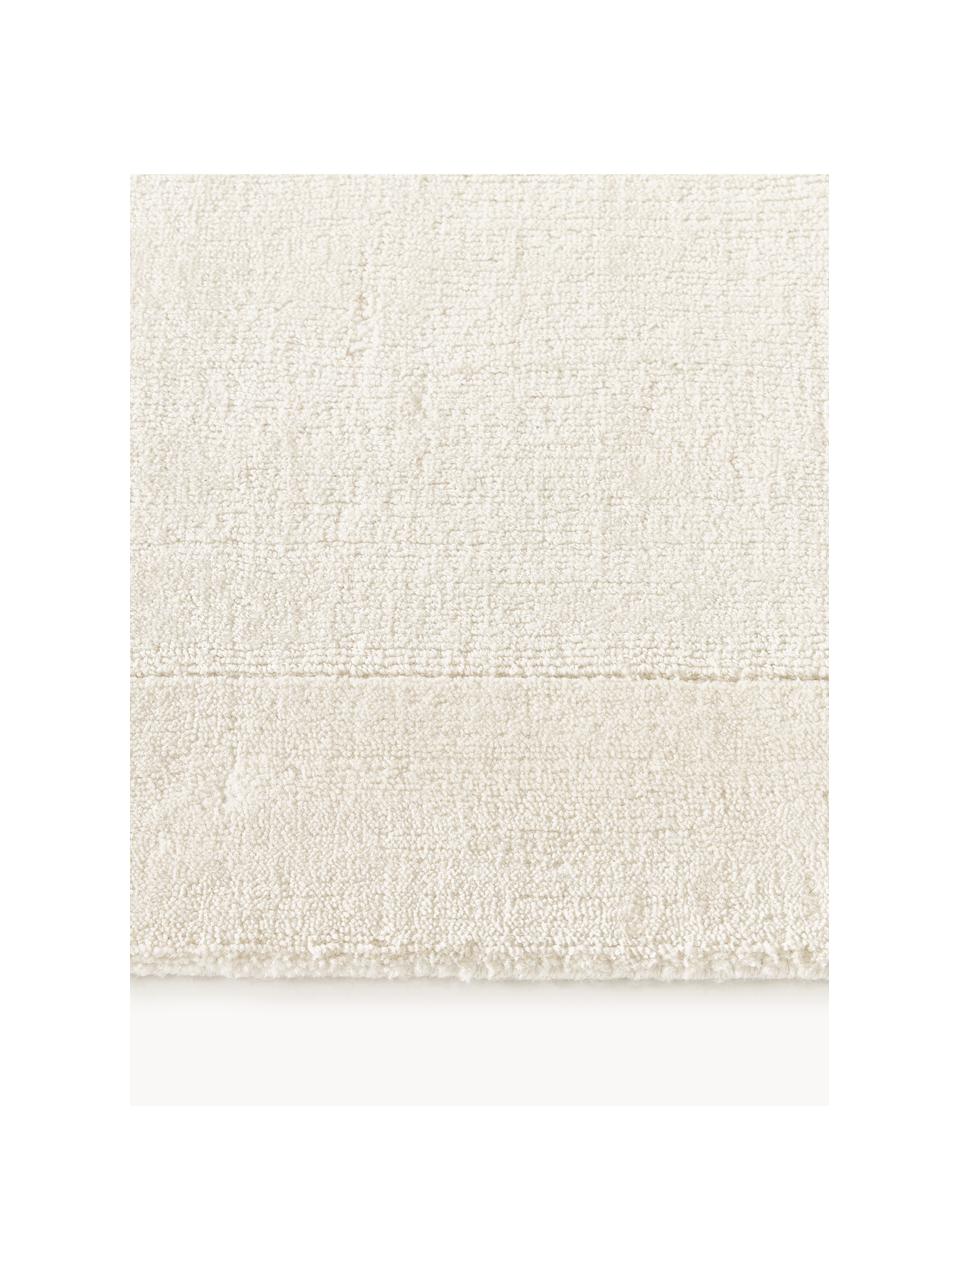 Tapis à poils courts Kari, 100 % polyester, certifié GRS, Blanc crème, larg. 80 x long. 250 cm